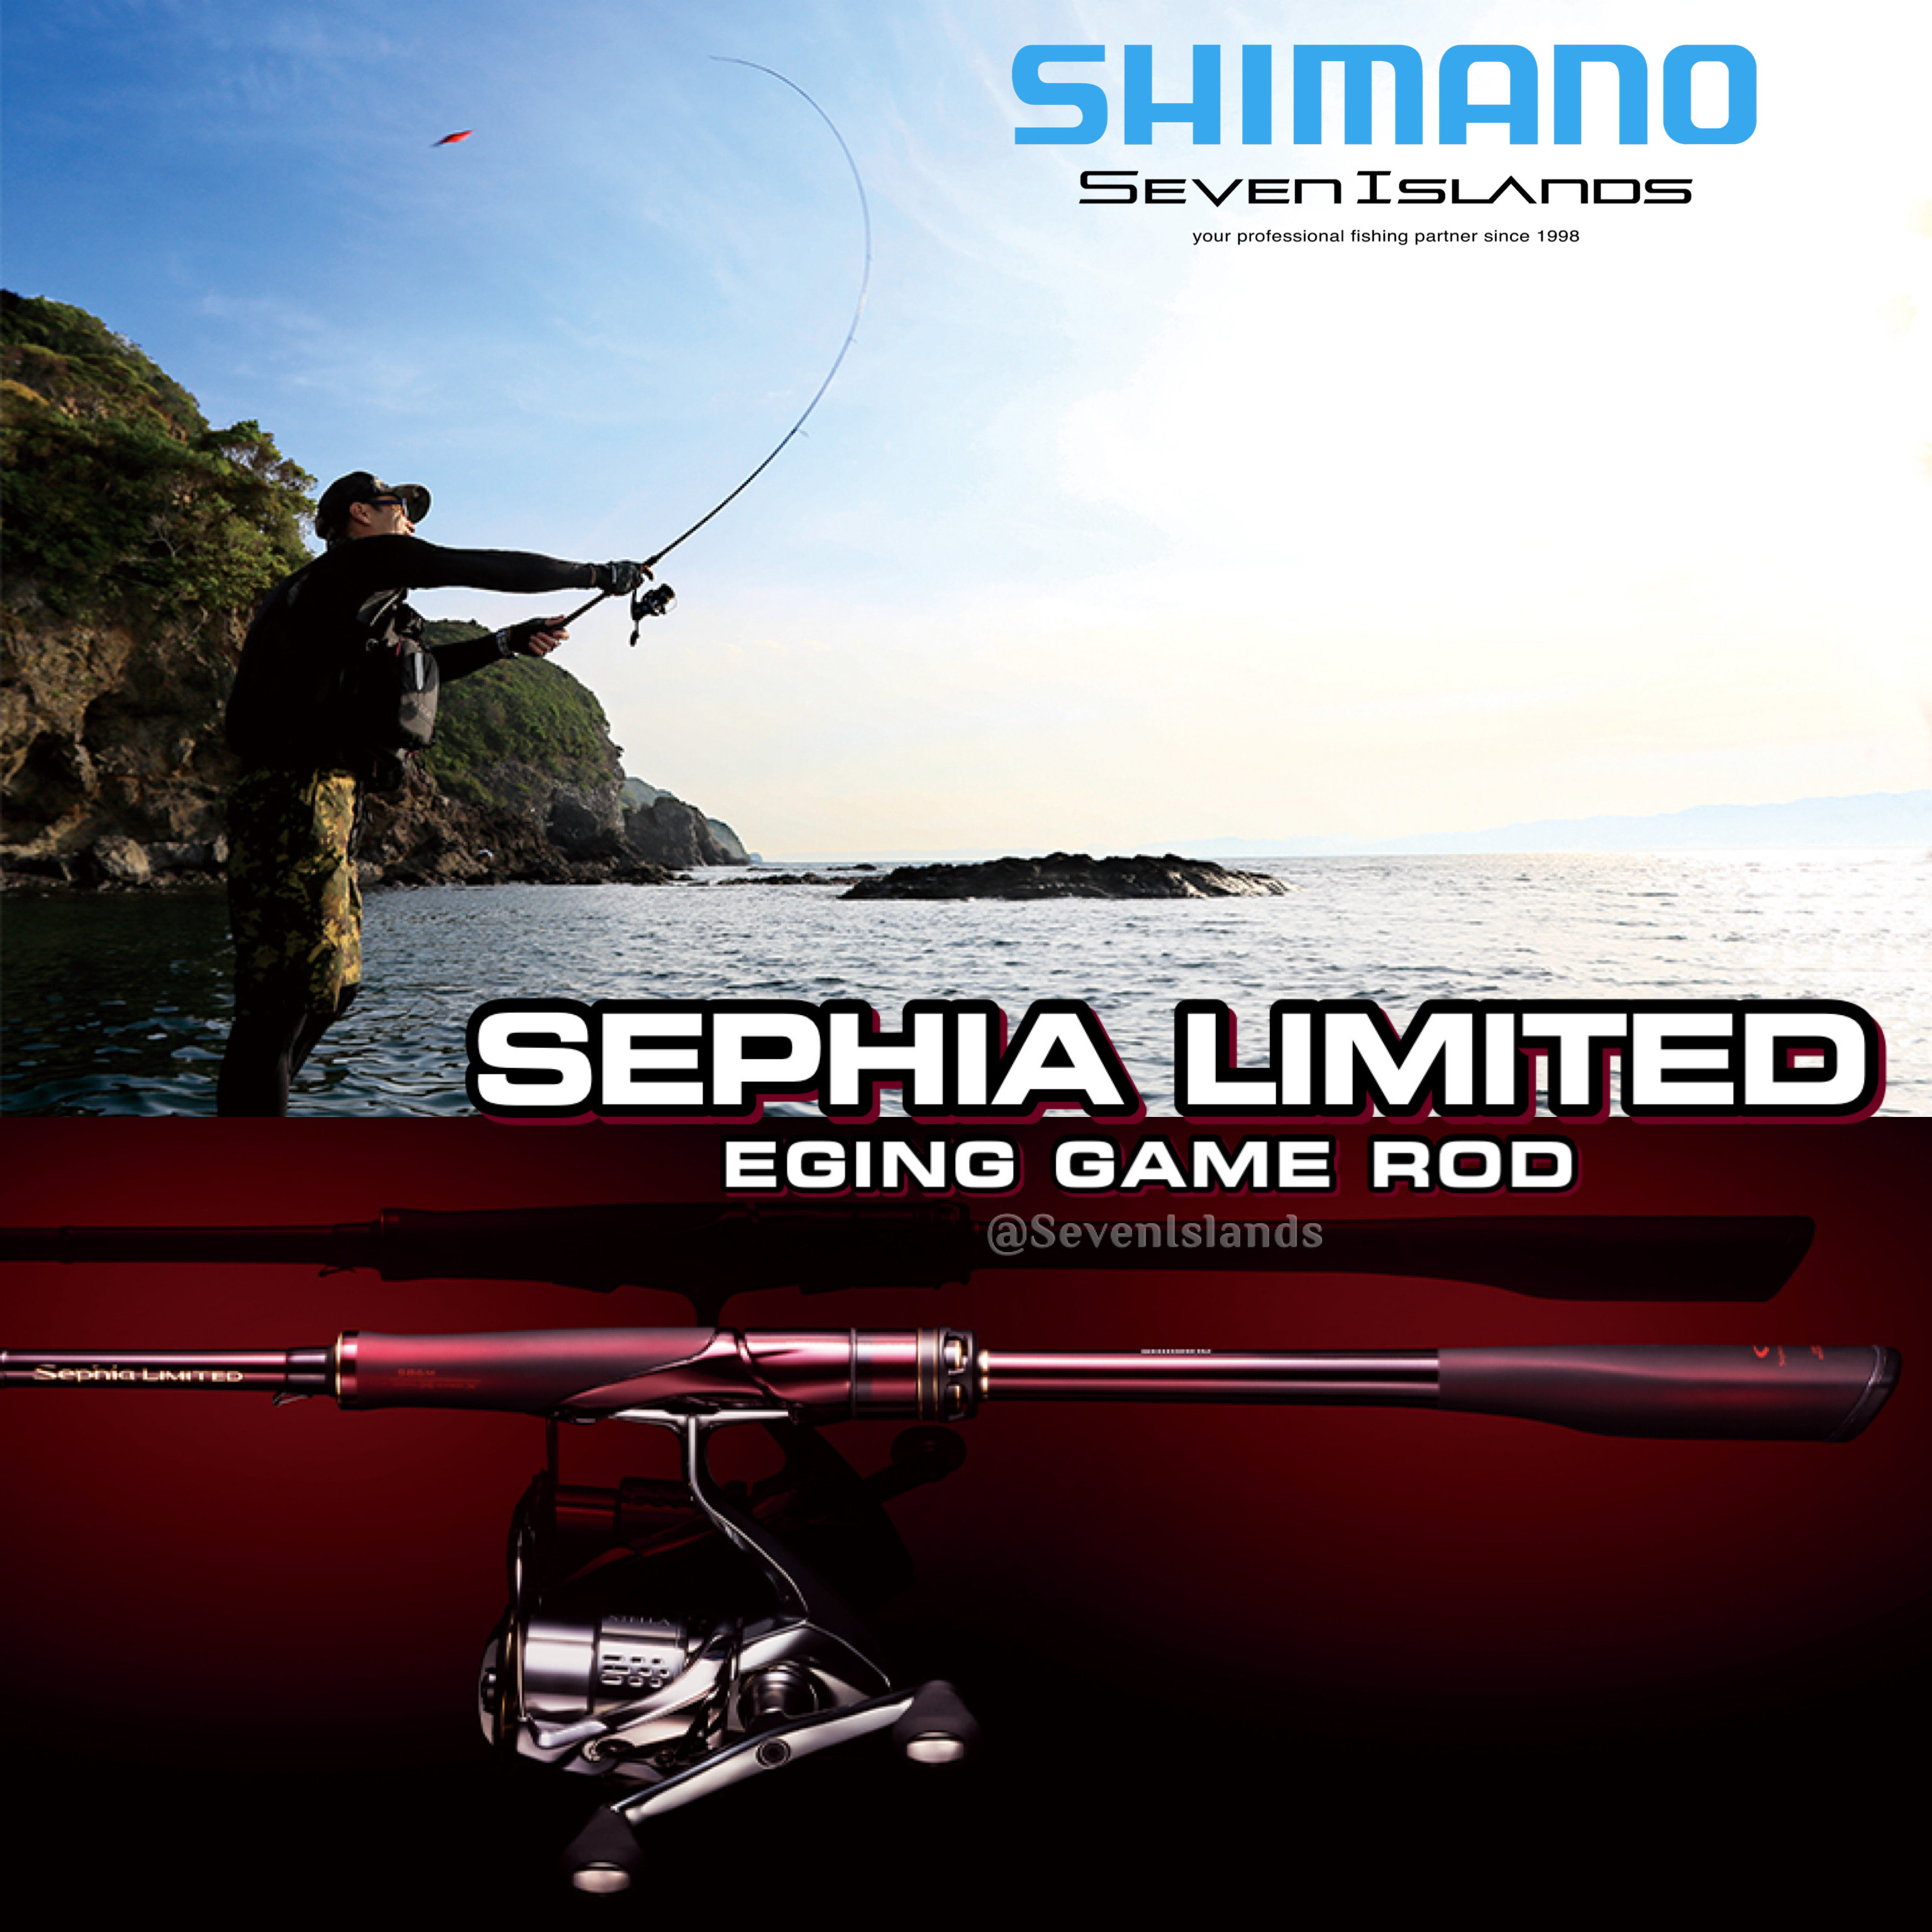 Shimano Sephia Limited rod